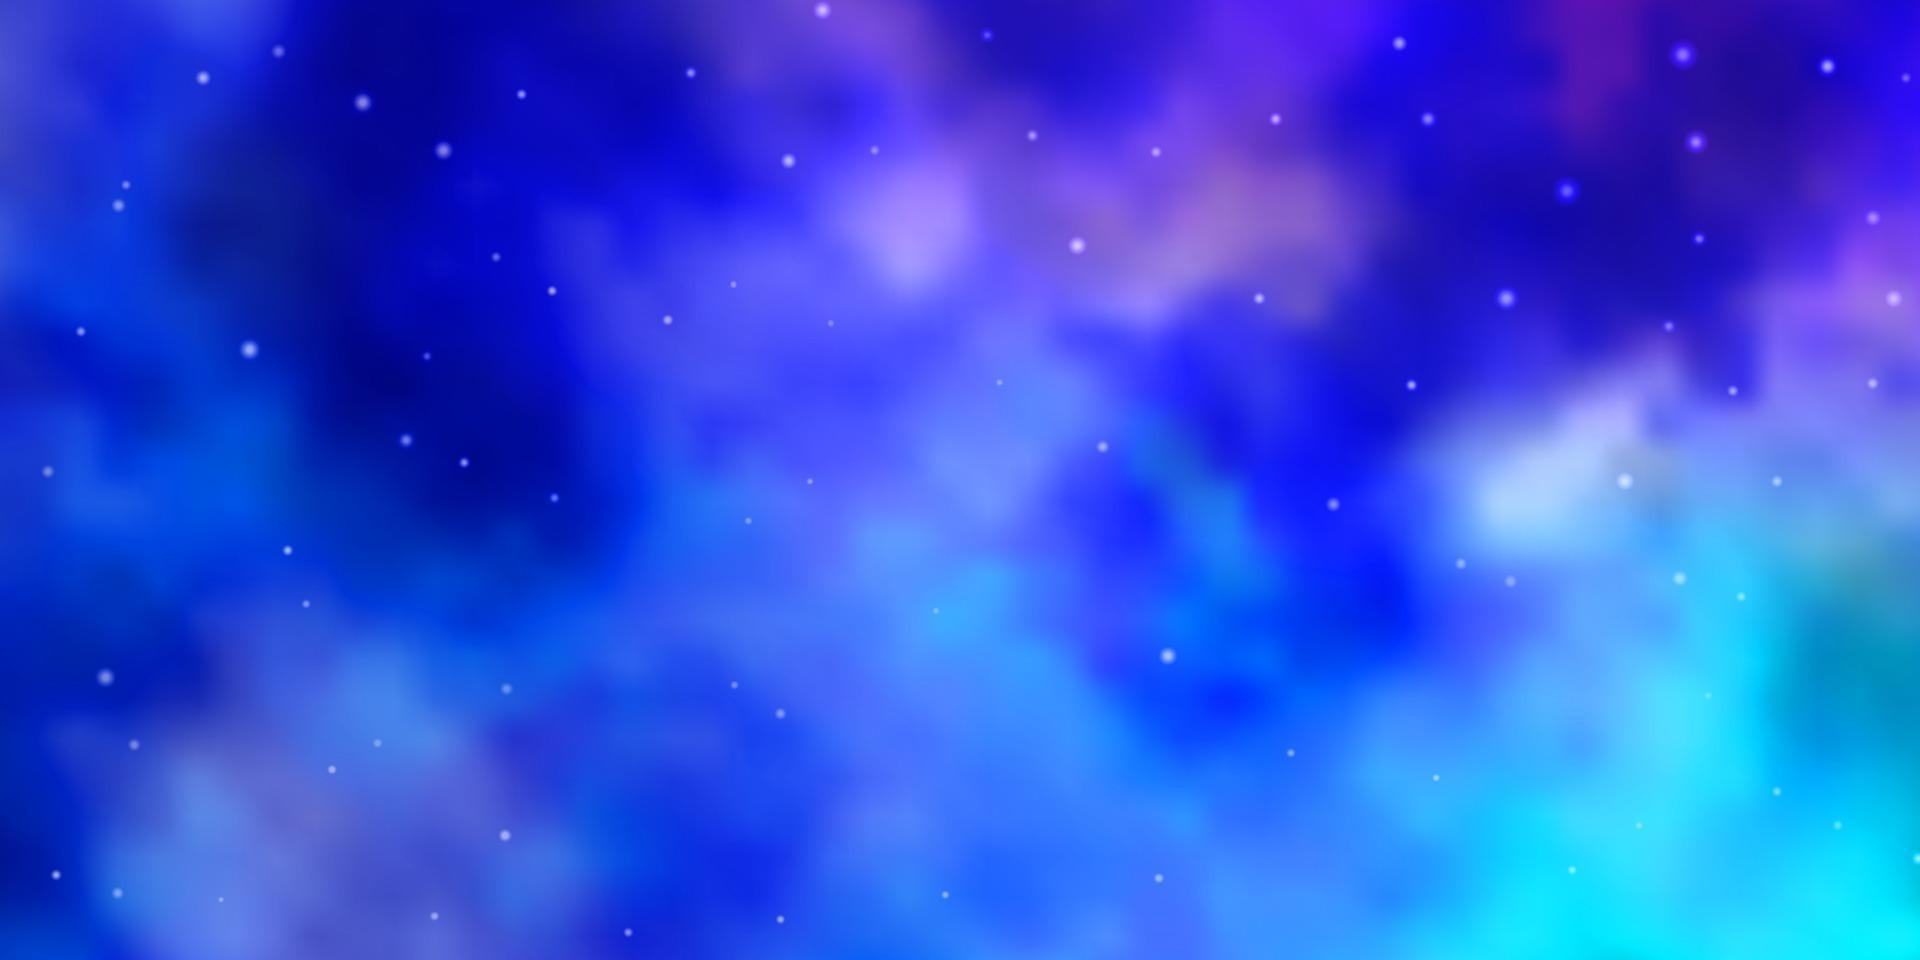 fundo vector rosa claro, azul com estrelas coloridas.